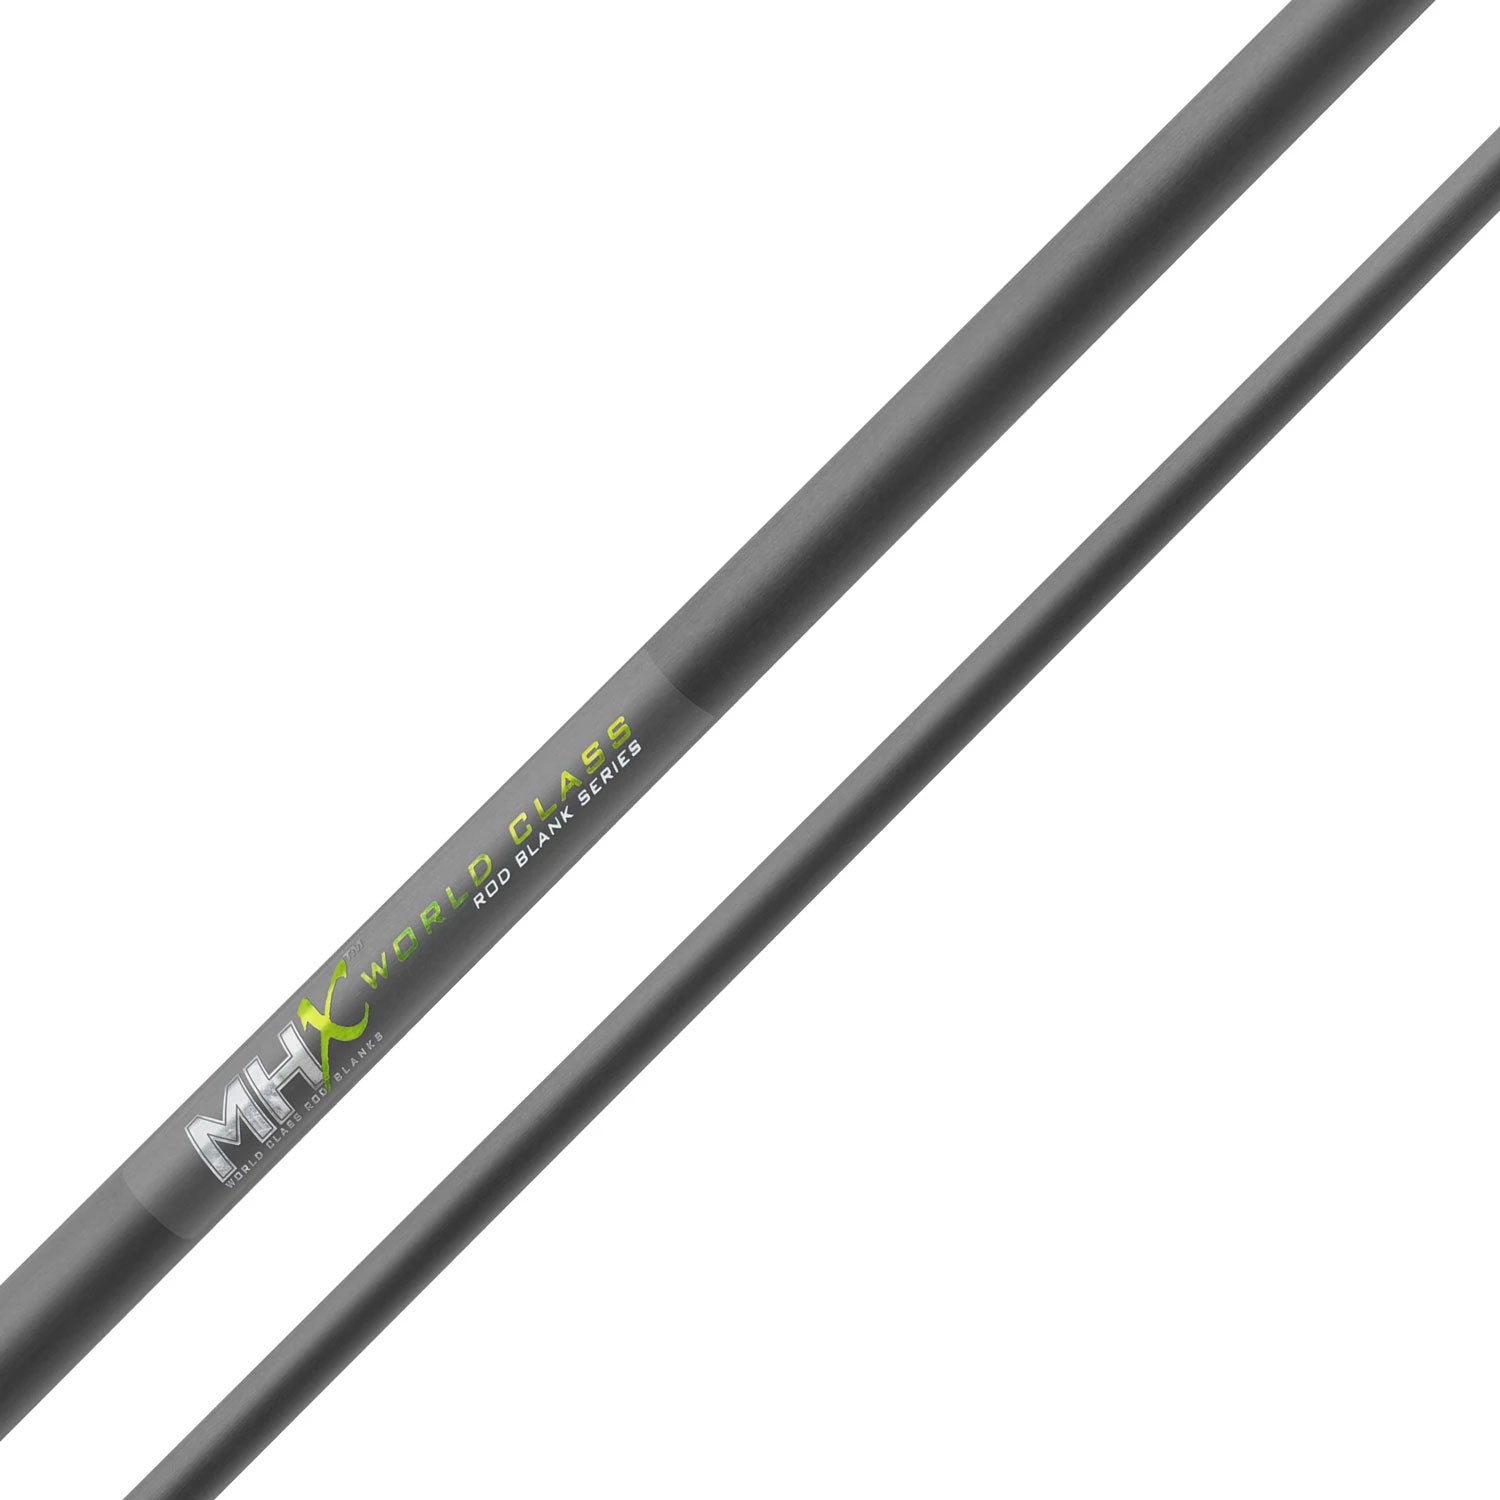 MHX 7'6 Med-Light Spin Jig Rod Blank - SJ9000-2-MHX